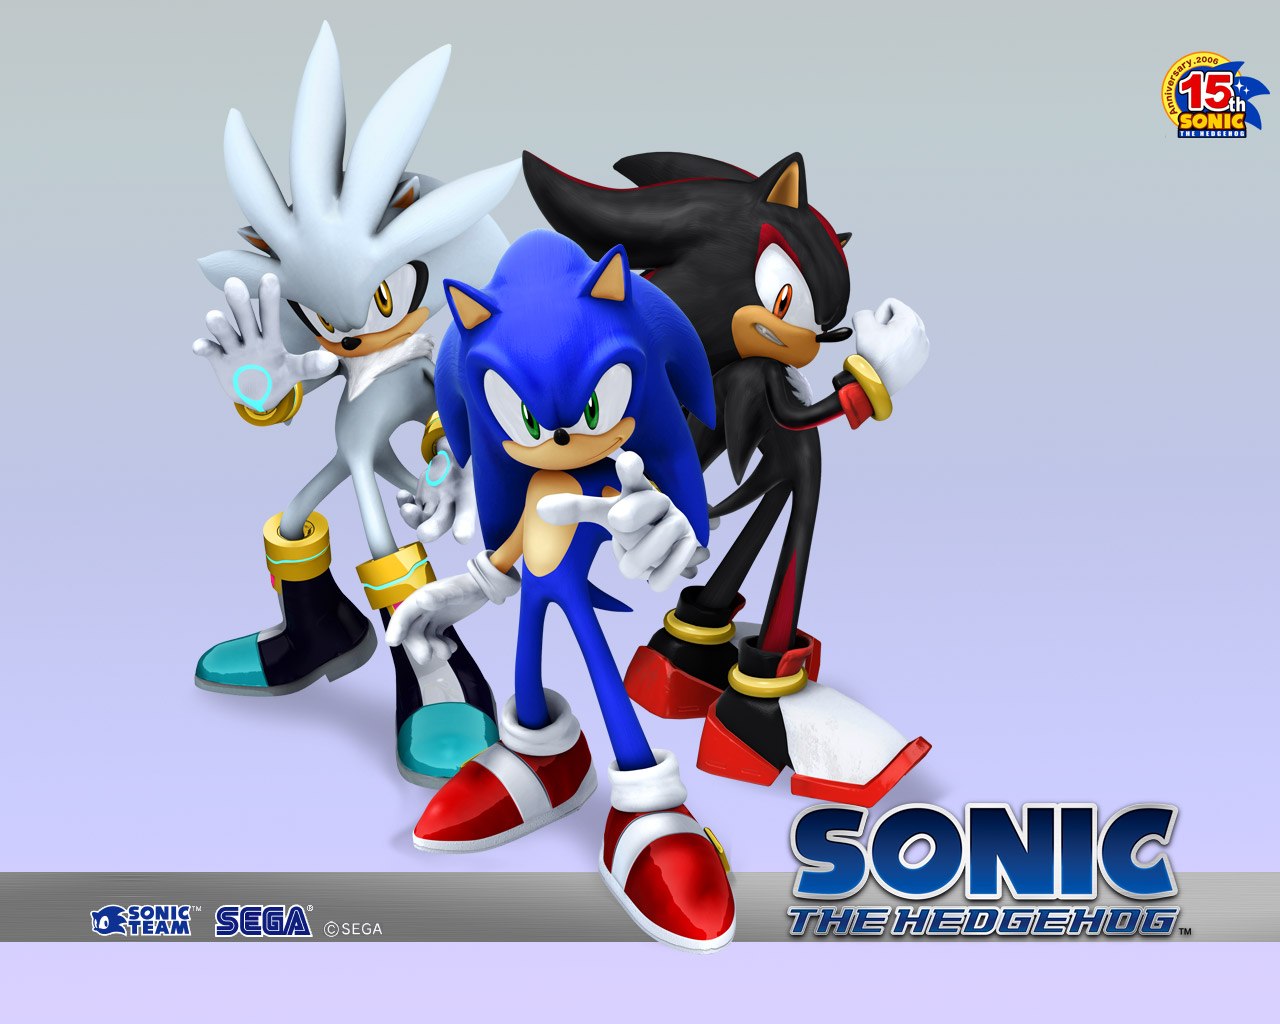 sonic the hedgehog, shadow the hedgehog, silver the hedgehog, sonic the hedgehog (2006), video game